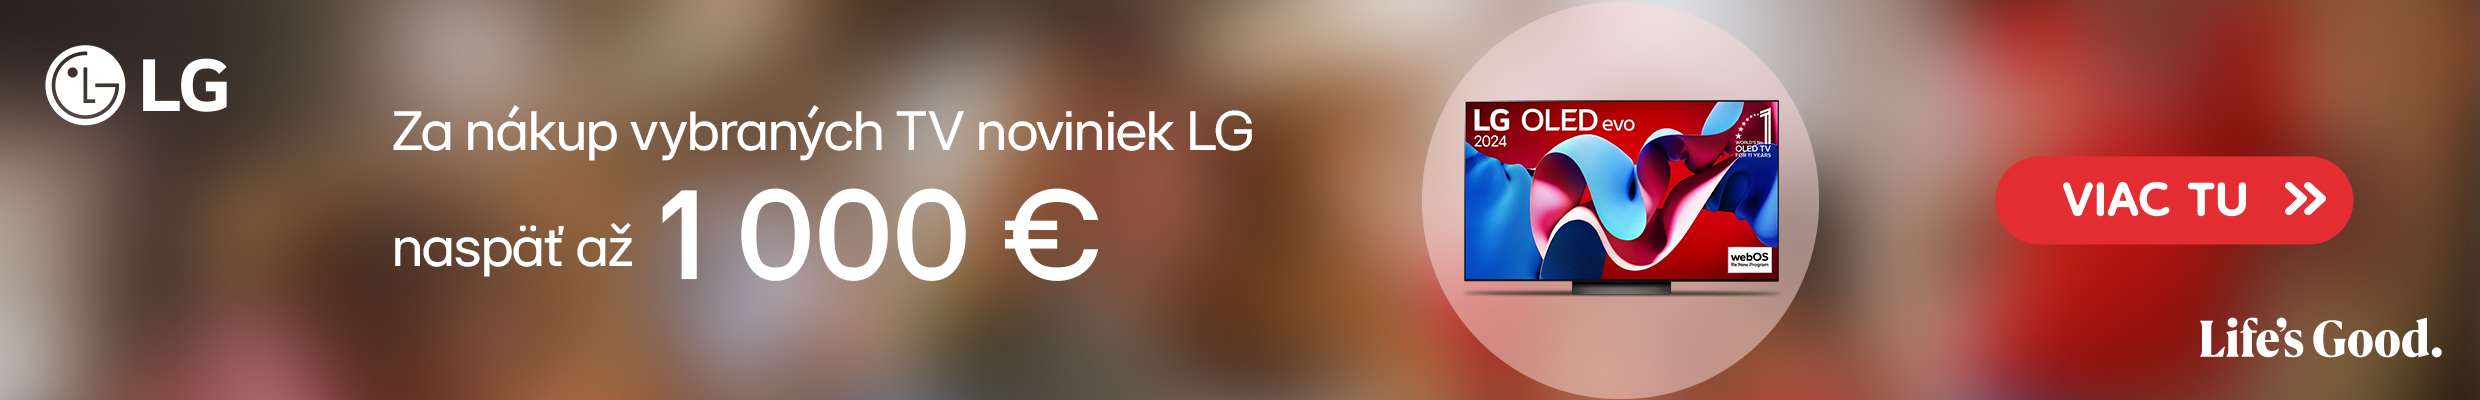 LG cashback TV-Audio do 1000 EUR-produkt